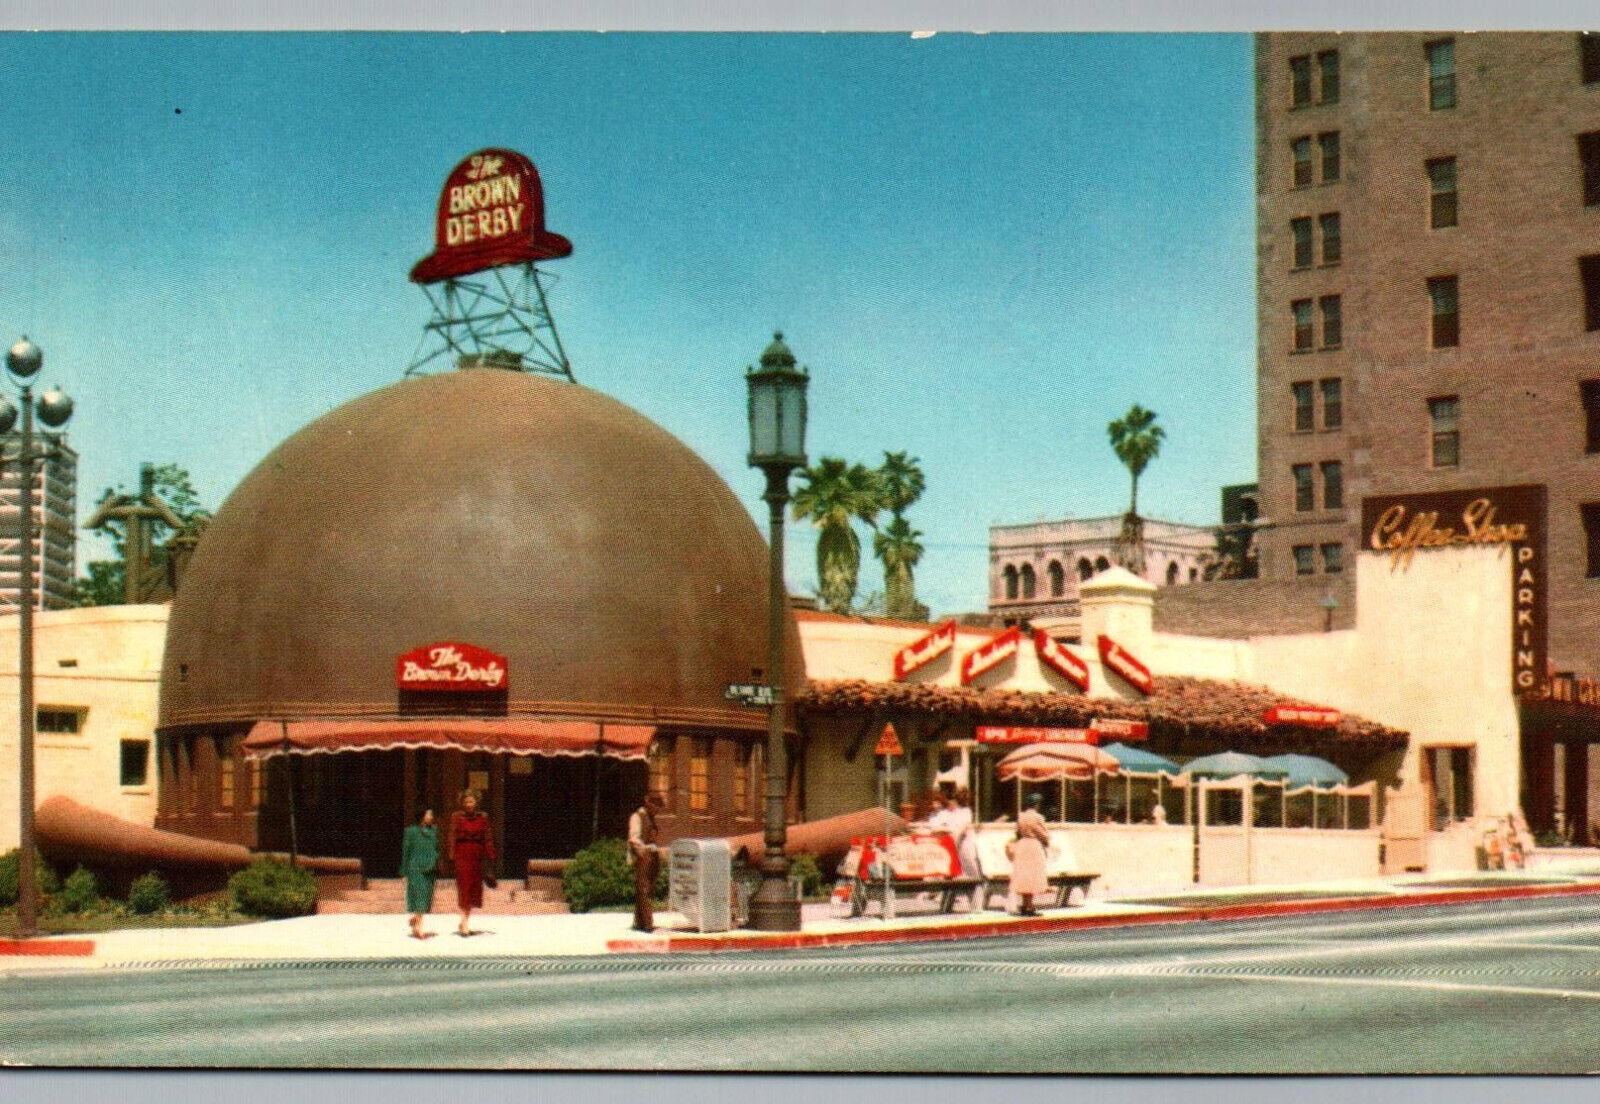 Los Angeles CA Postcard Brown Derby Hat Restaurant California Street View Chrome